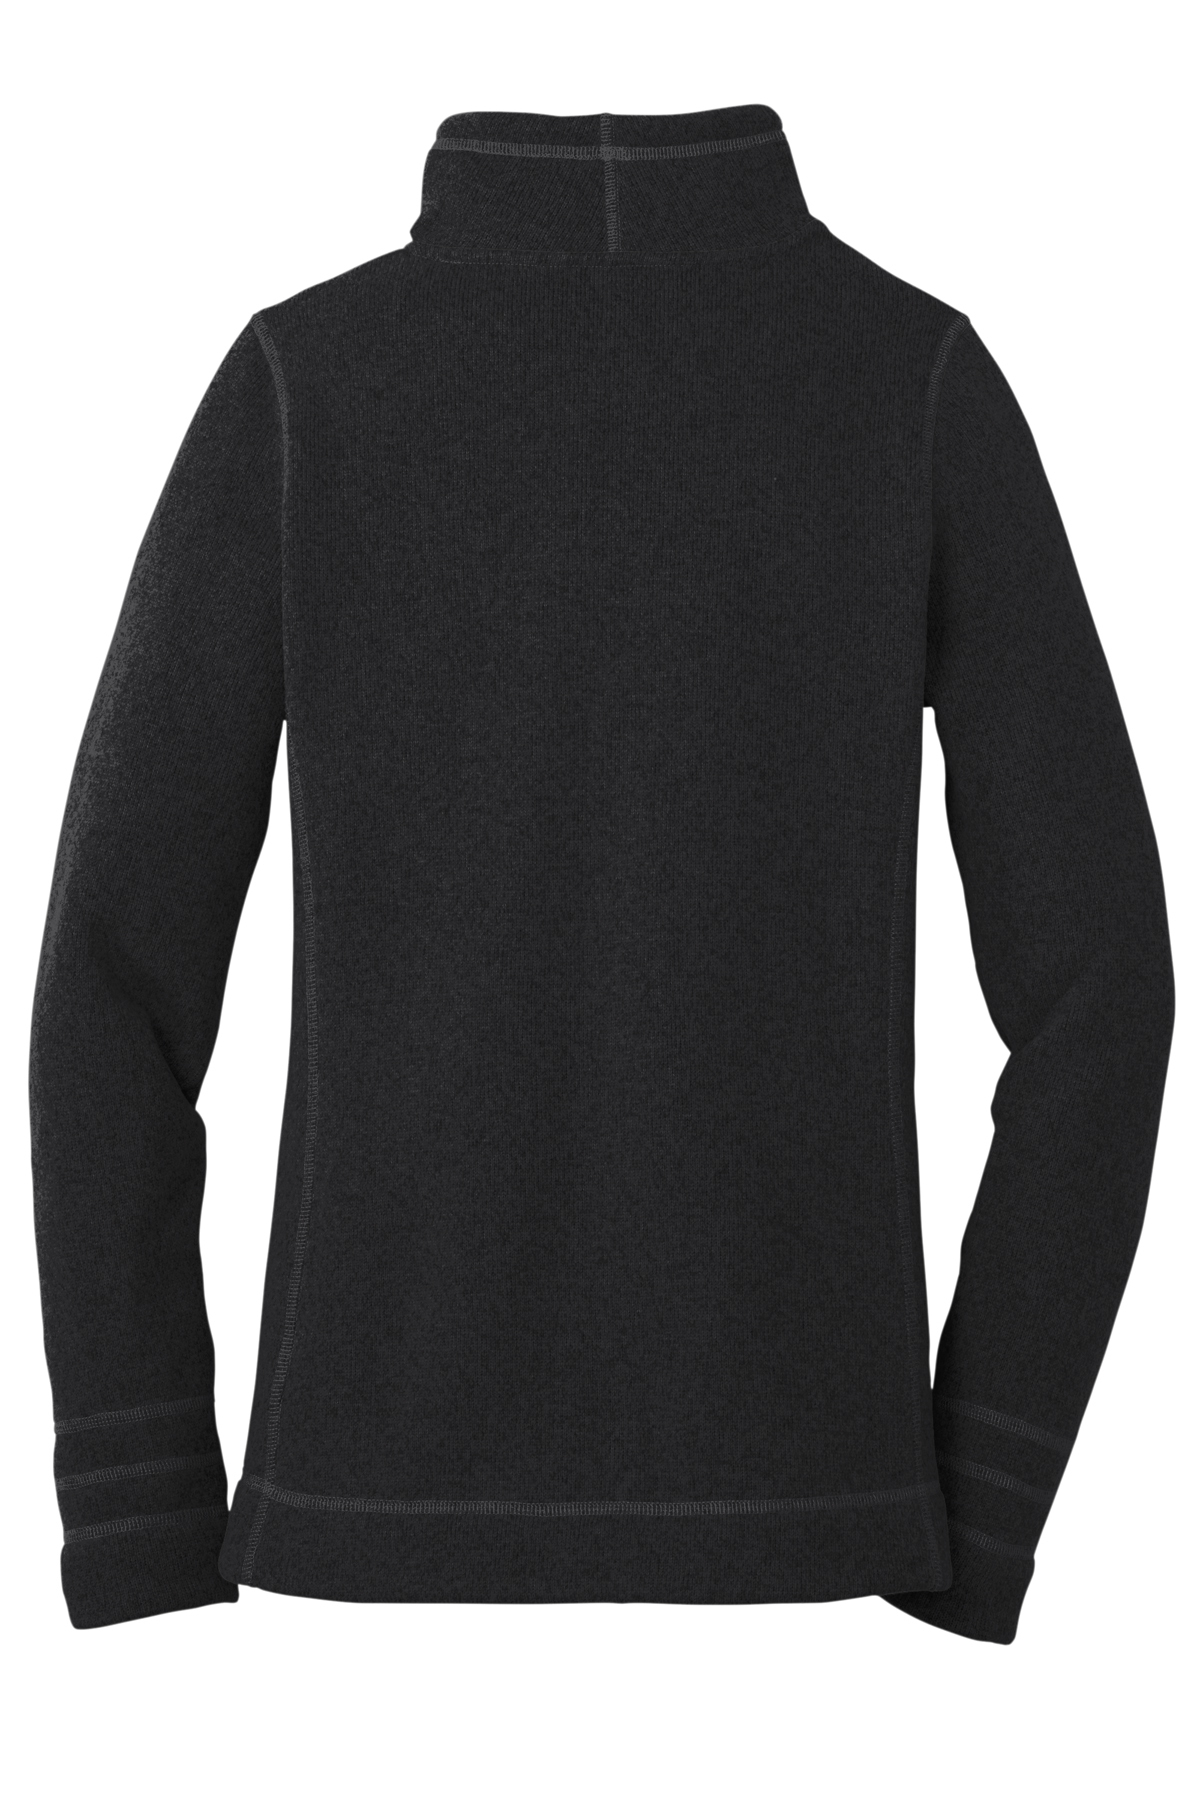 The North Face Maggy Sweater Fleece Women’s Dark Heather Grey Medium New